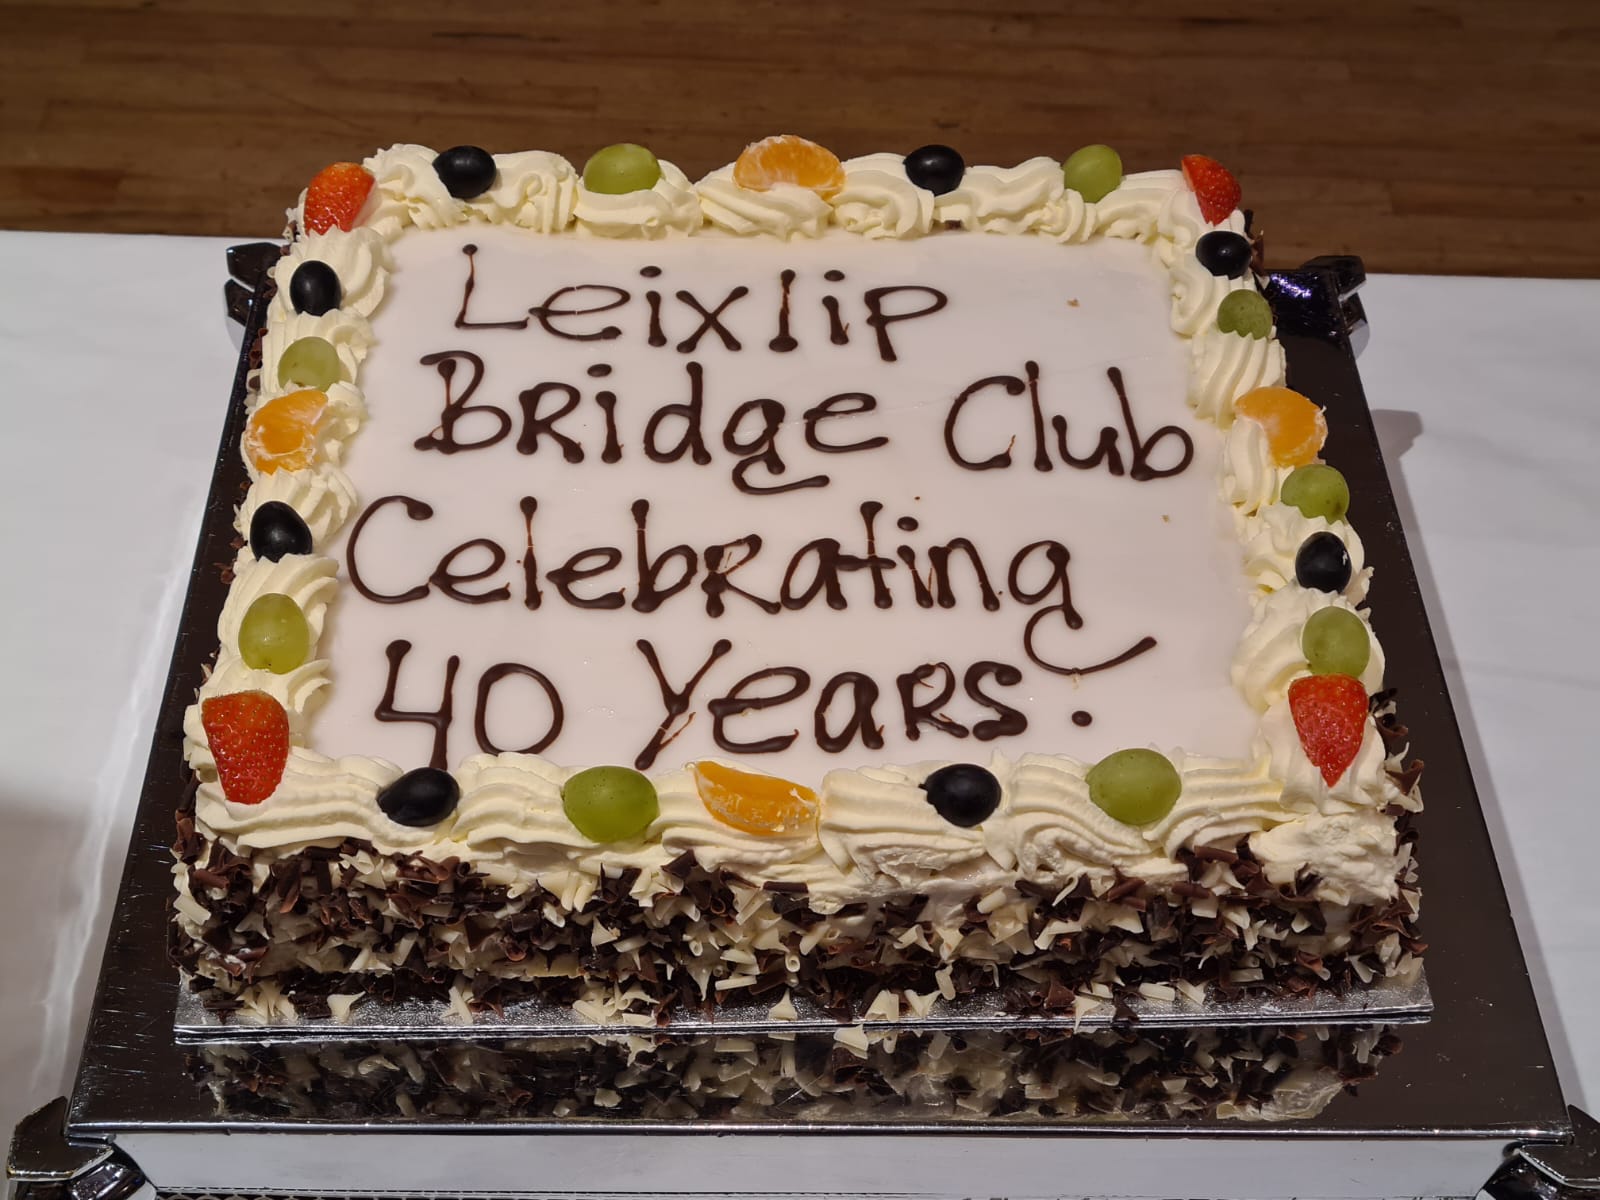 Leixli[p Bridge Club Celebrates 40 years on 18 May 2023 at Springfield Hotel